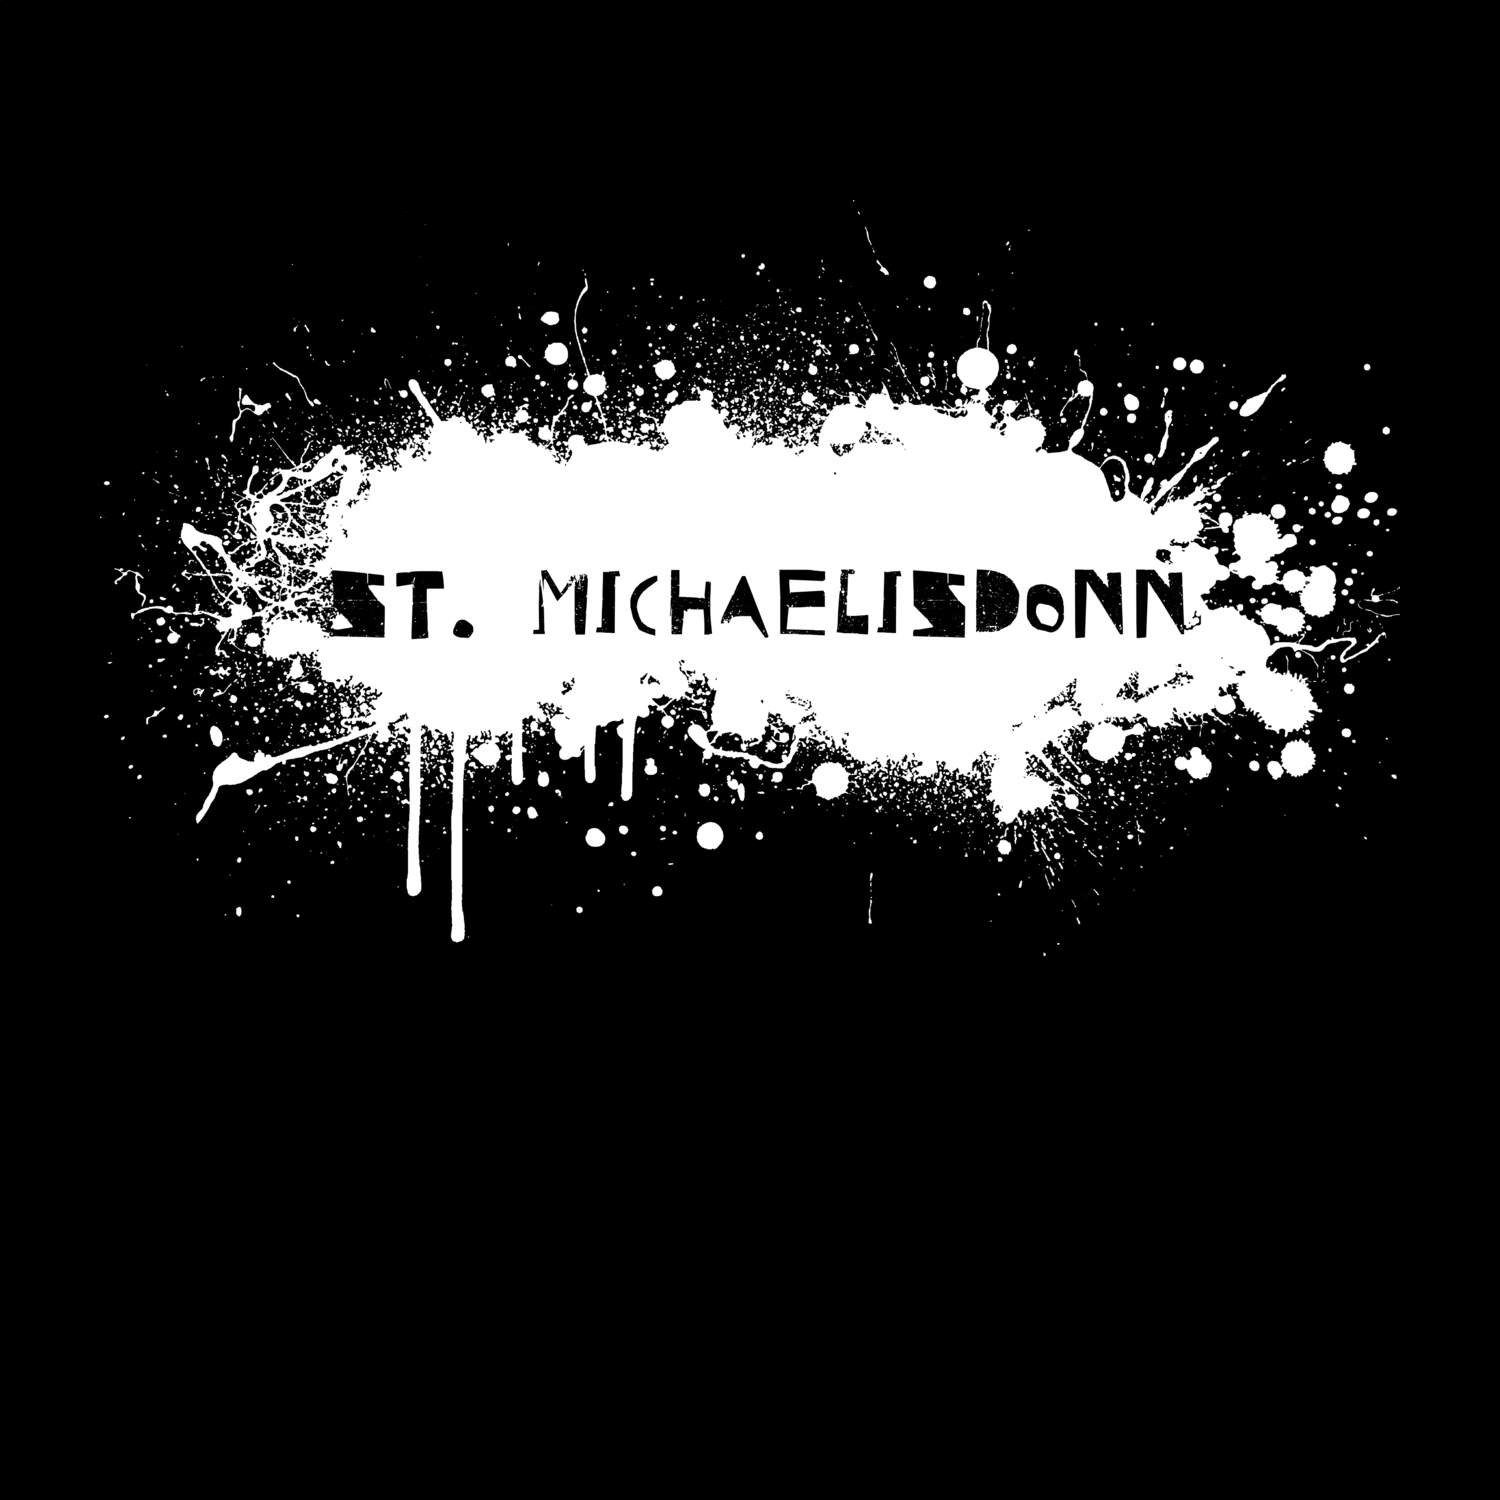 St. Michaelisdonn T-Shirt »Paint Splash Punk«